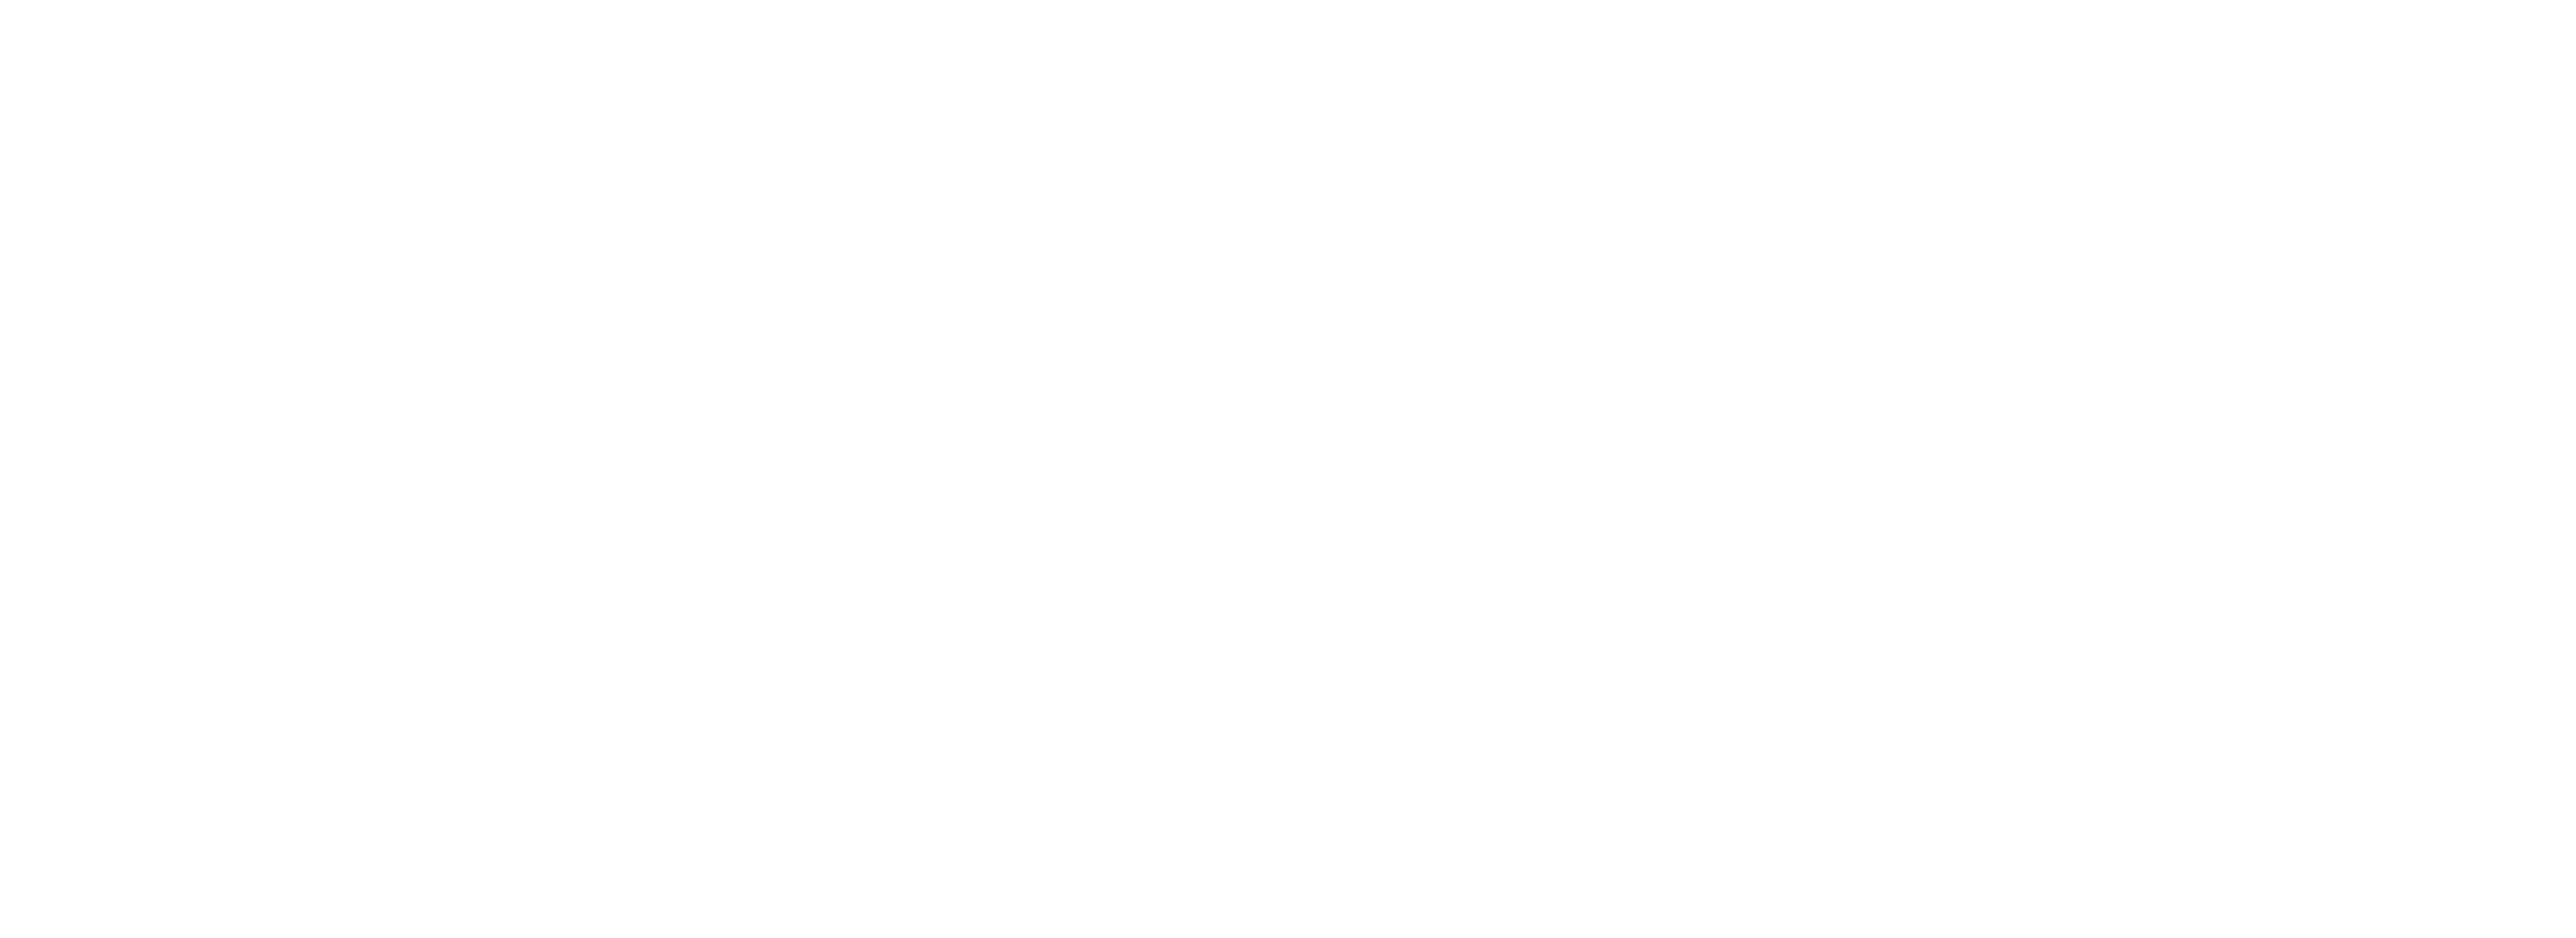 konoisseur logo groupe